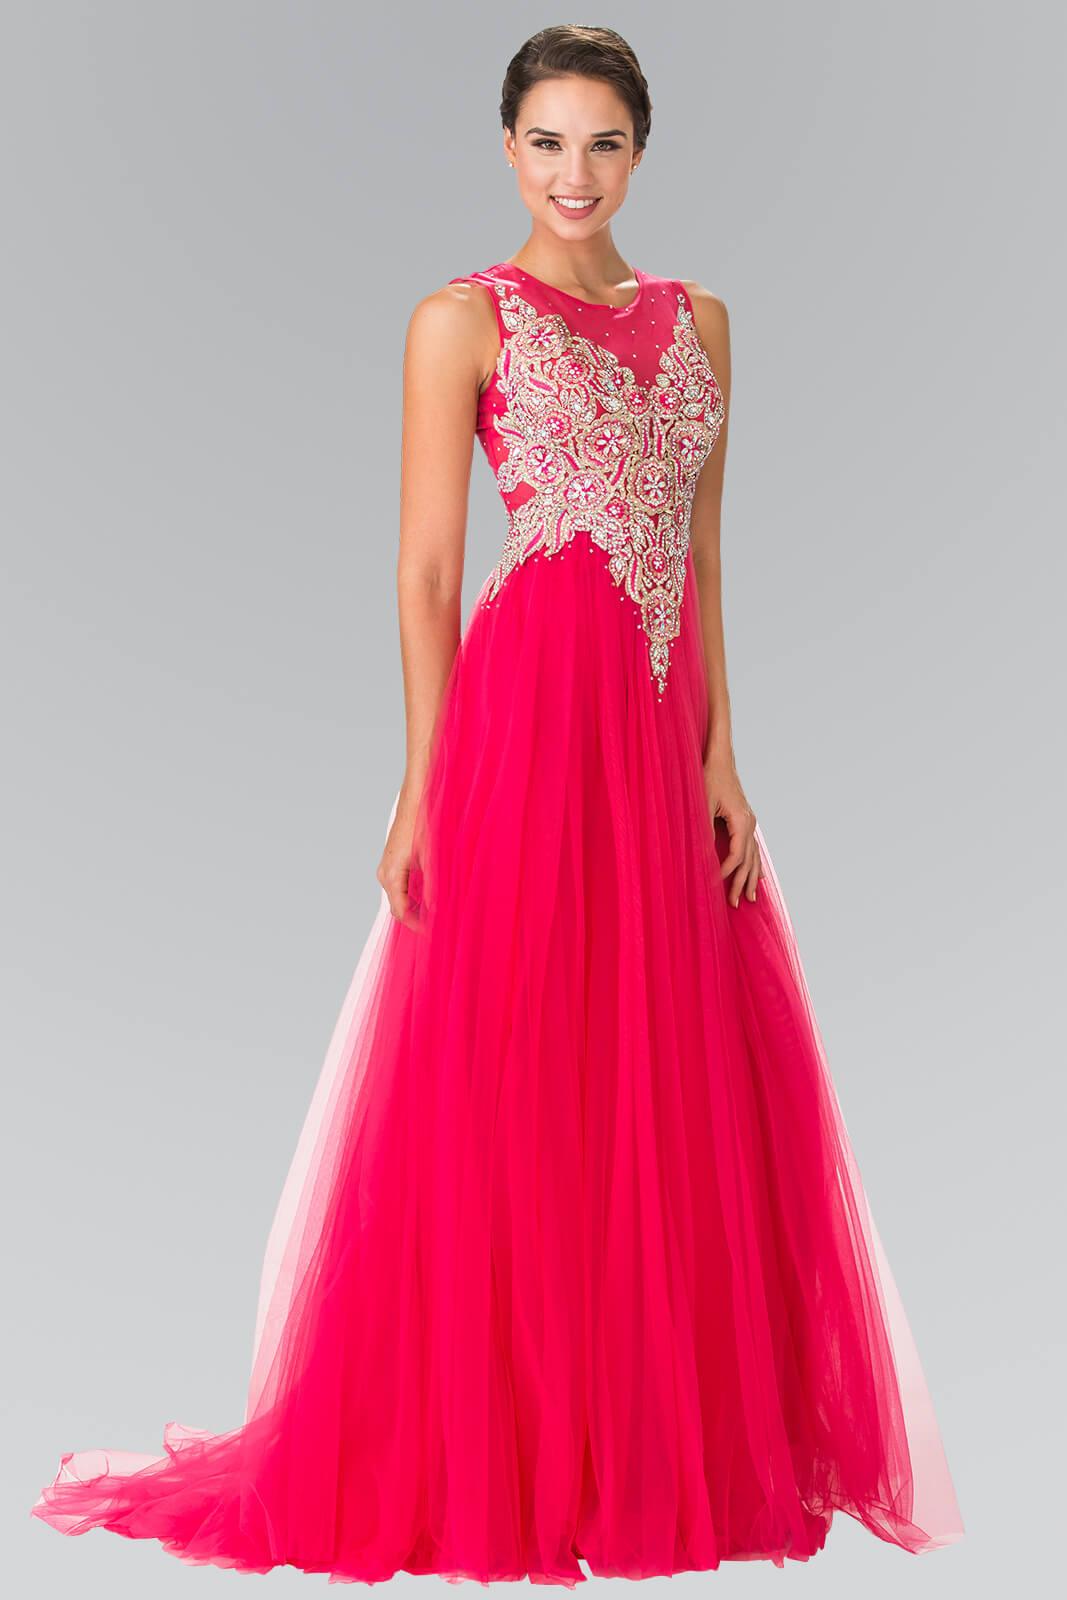 Prom Sleeveless Dress Formal Gown - The Dress Outlet Elizabeth K